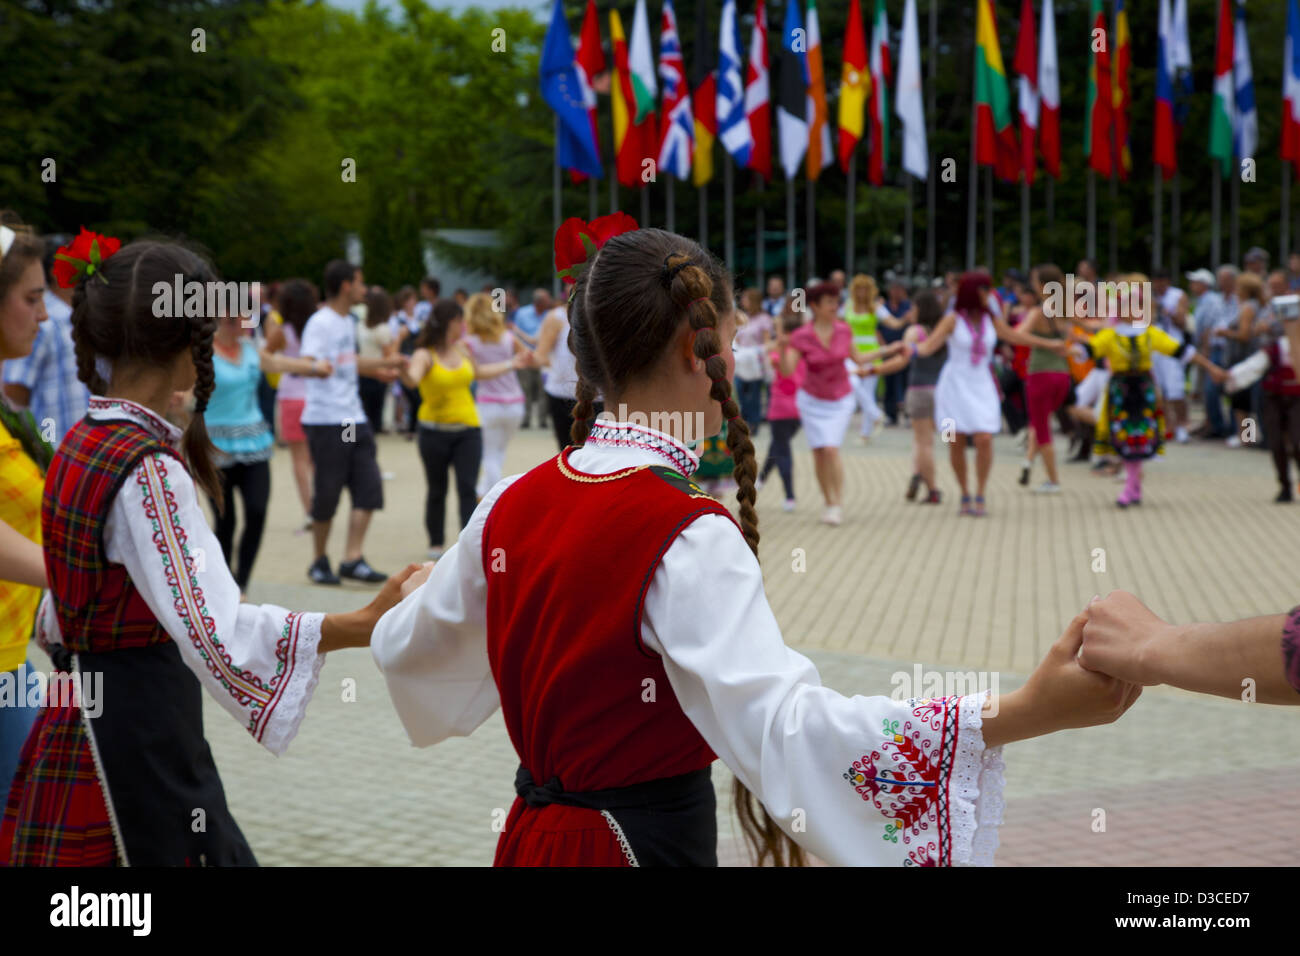 Bulgaria, Europe, Kazanlak, Flower Festival Parade, Girls Dancing In Their Traditional Costumes. Stock Photo